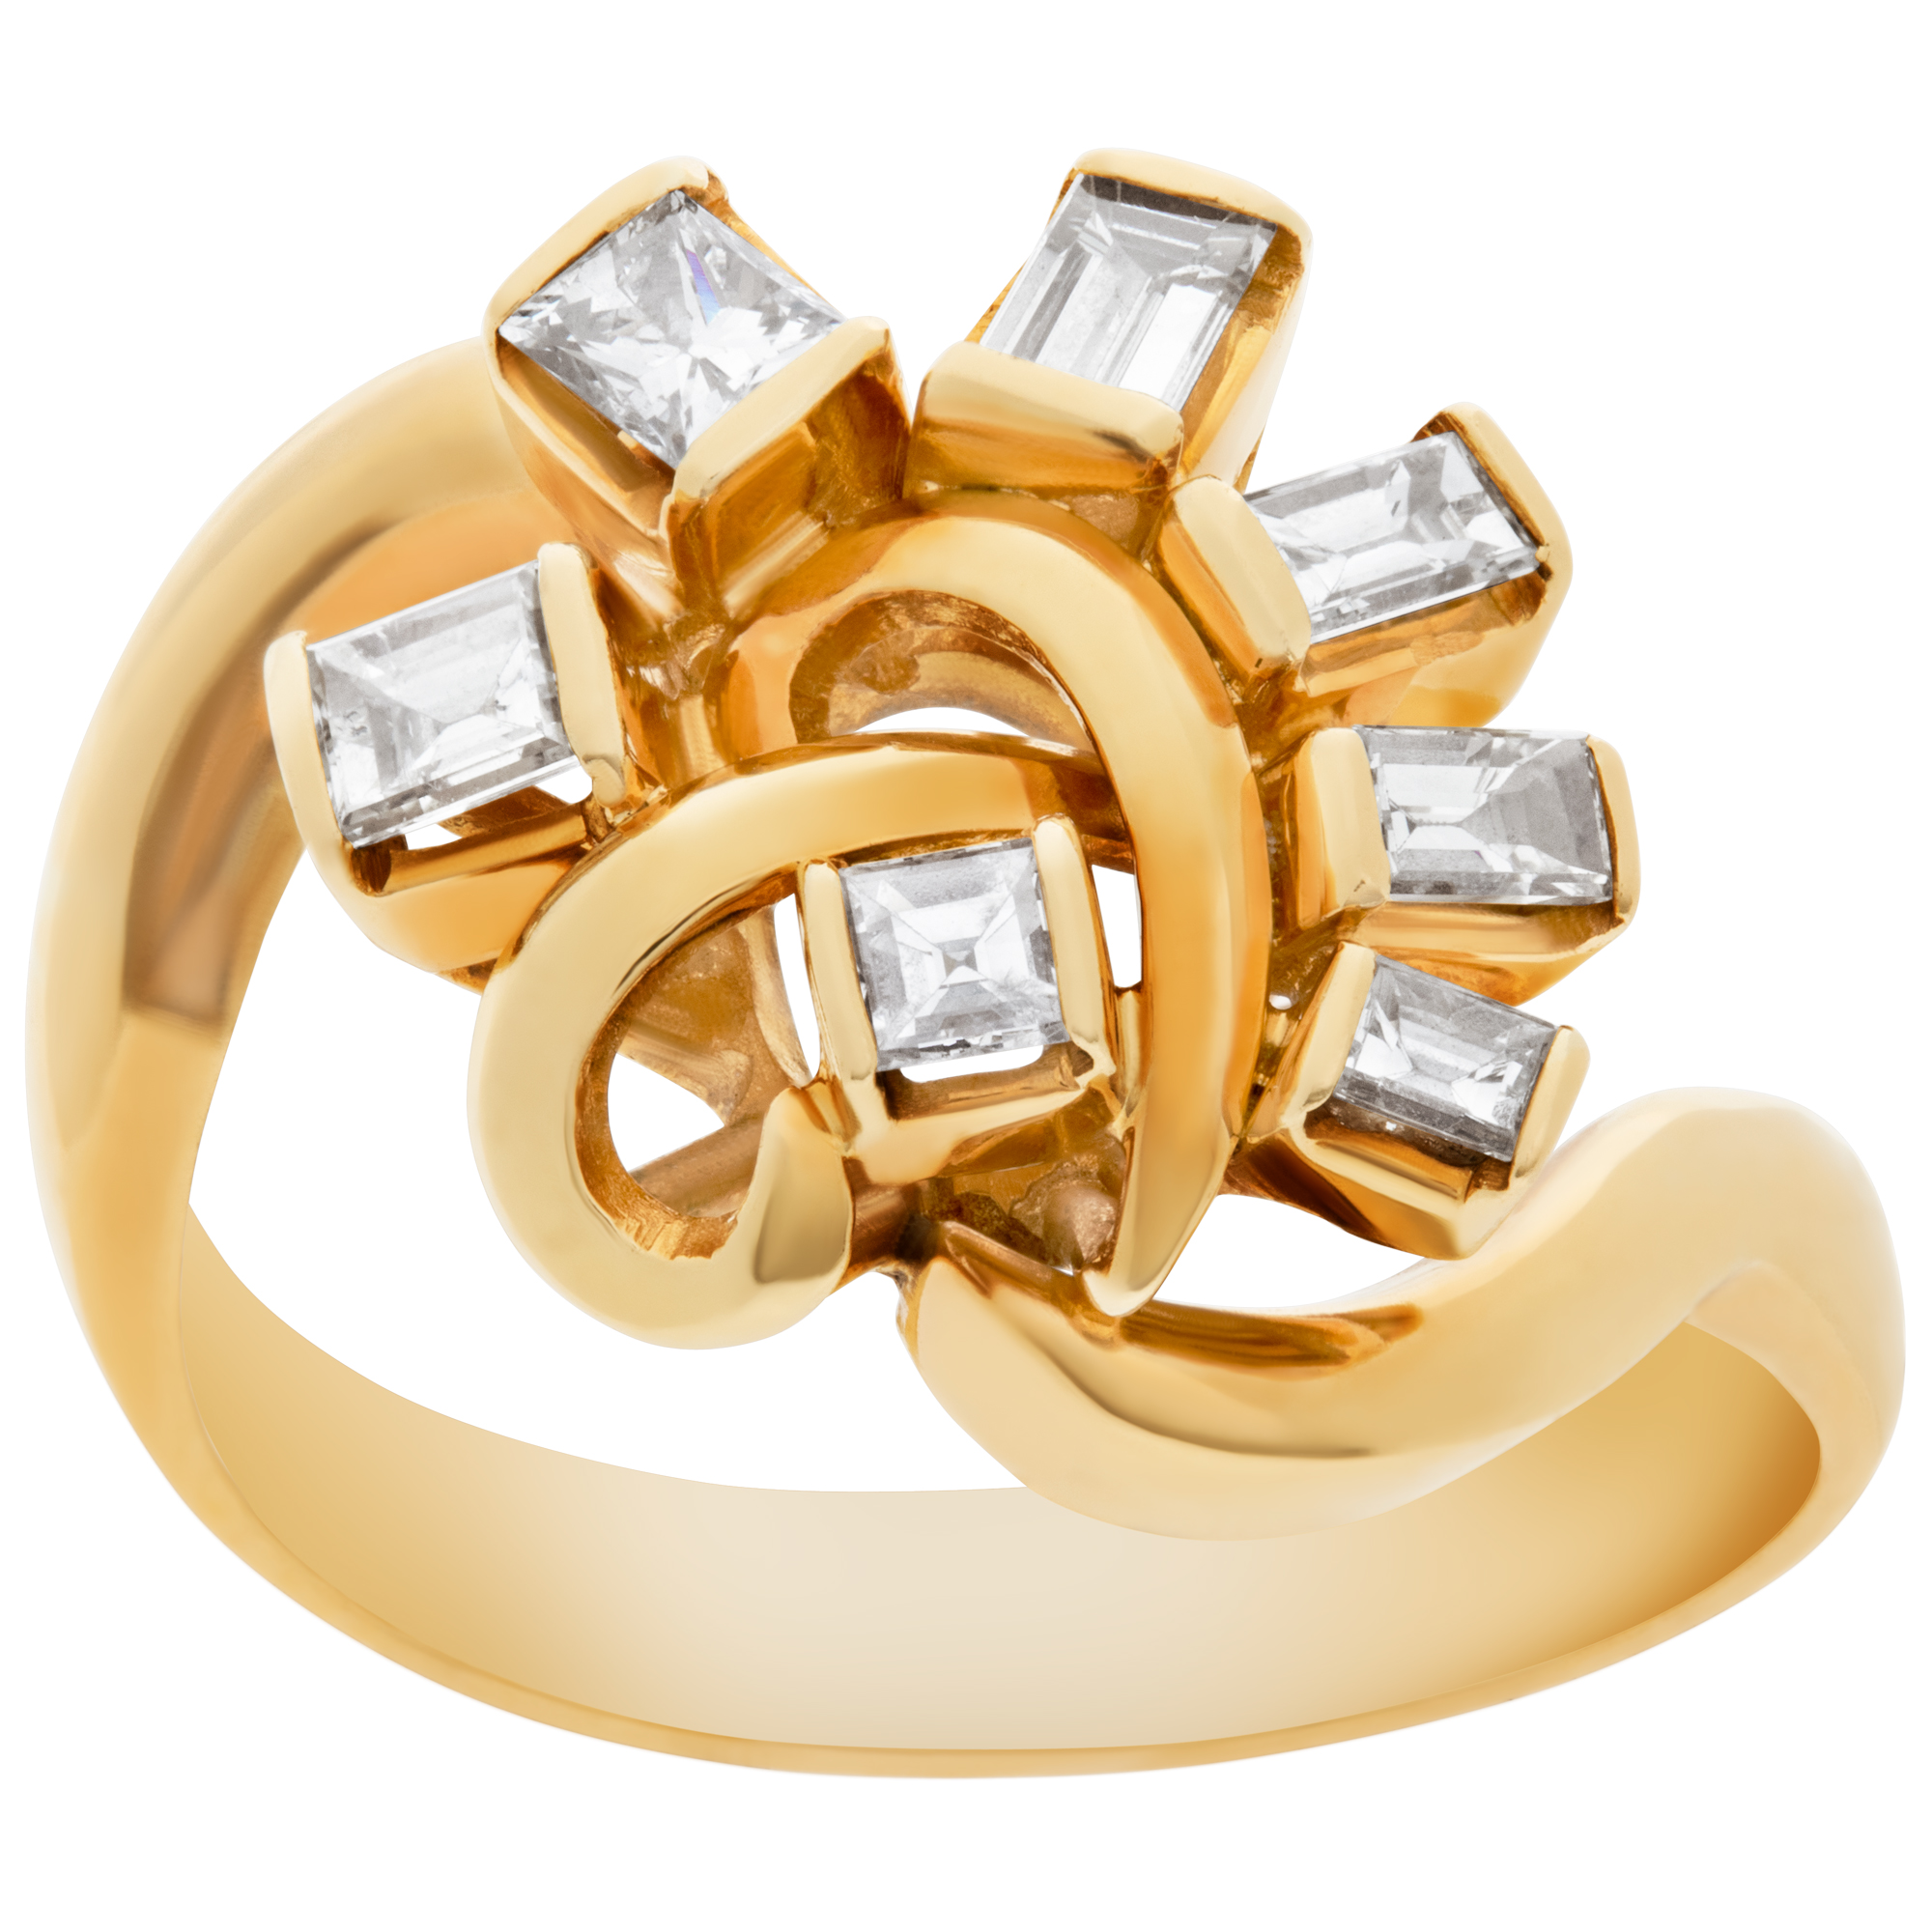 Swirl ring with diamonds set in 18k yellow gold